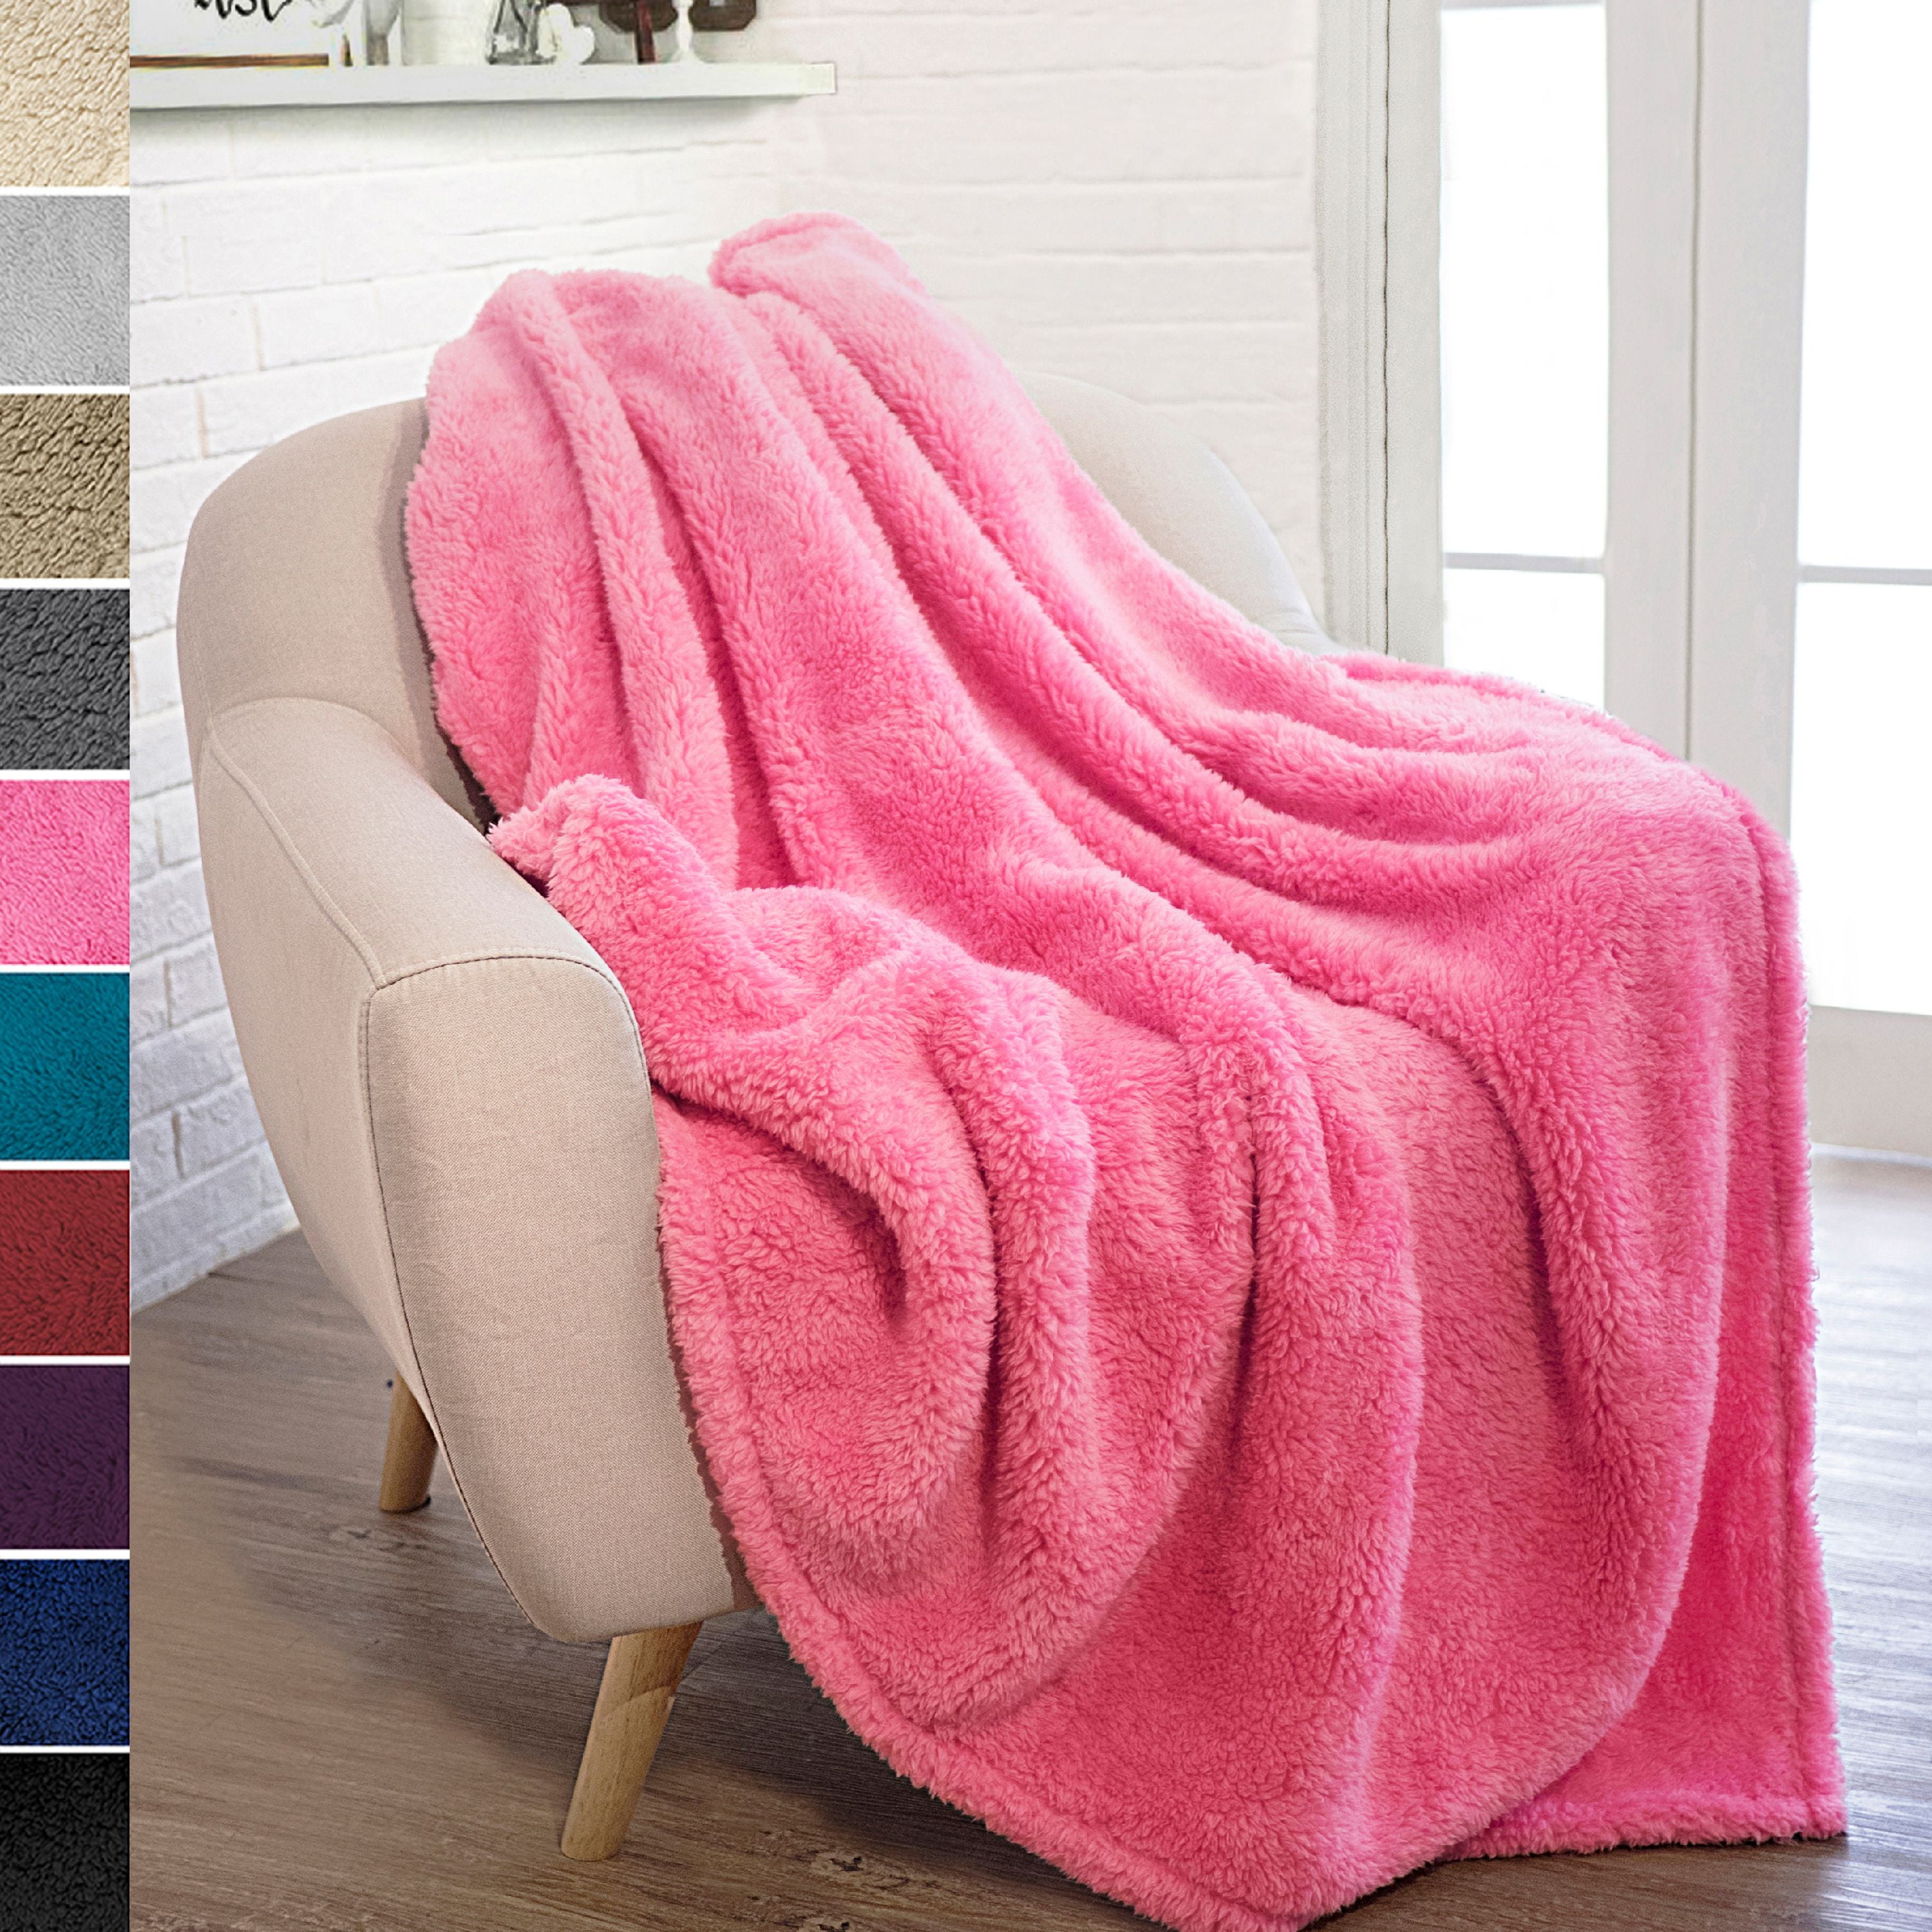 AUISS Plush Throw Velvet Blanket Balloons Pink Thermal Fleece Carpet Living Room Sofa for Women Dual Sided Sleep Mat Pad Flannel Cover for Winter 